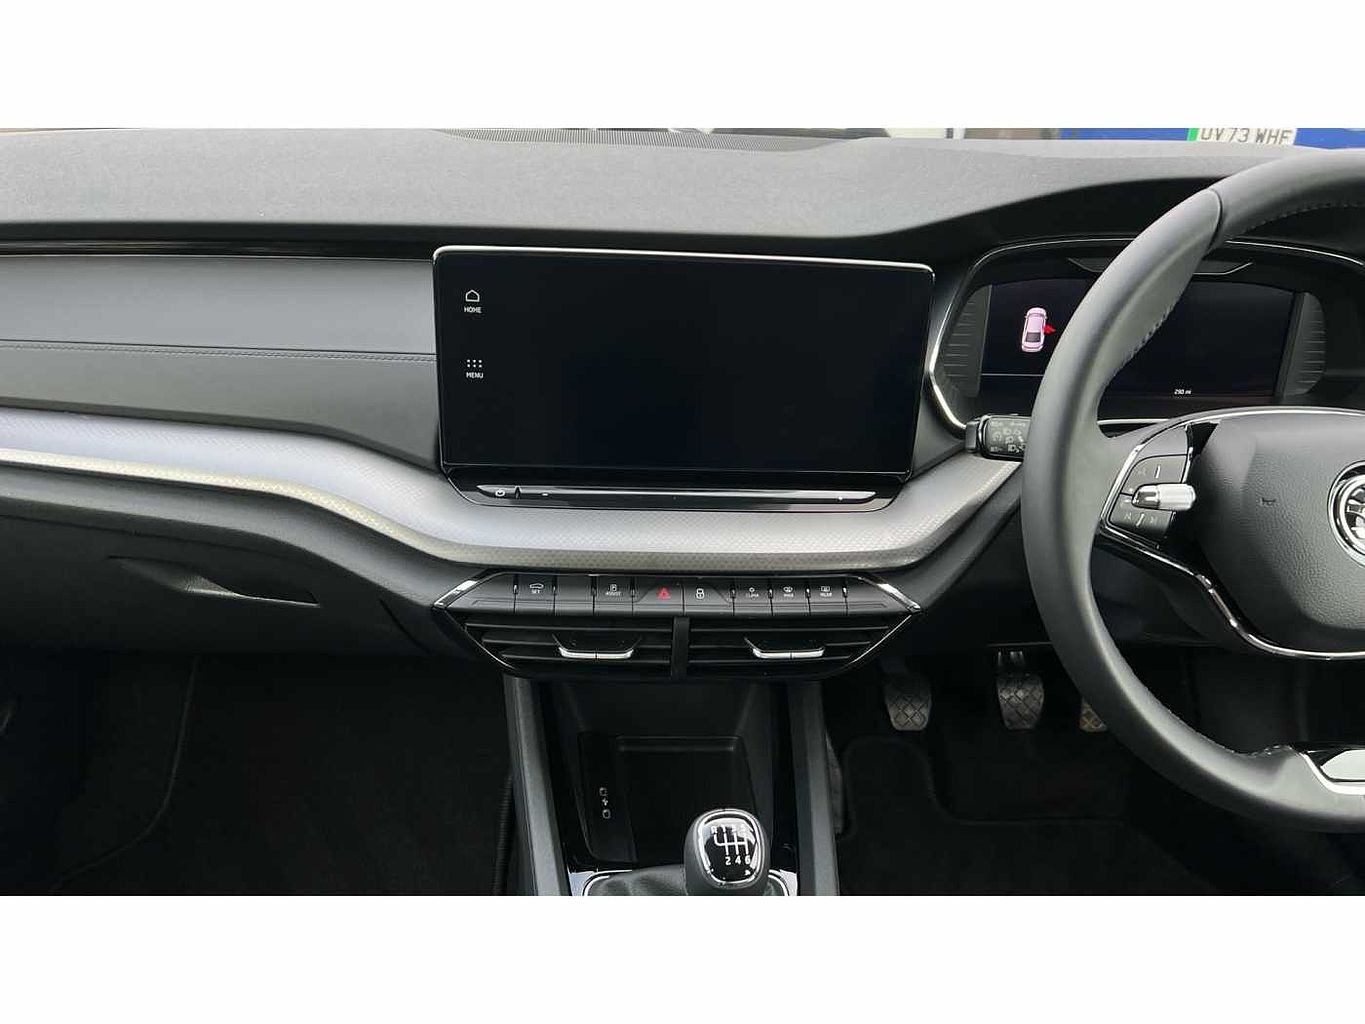 SKODA OCTAVIA ŠKODA  Diesel Hatchback 2.0 TDI SE Technology 5dr